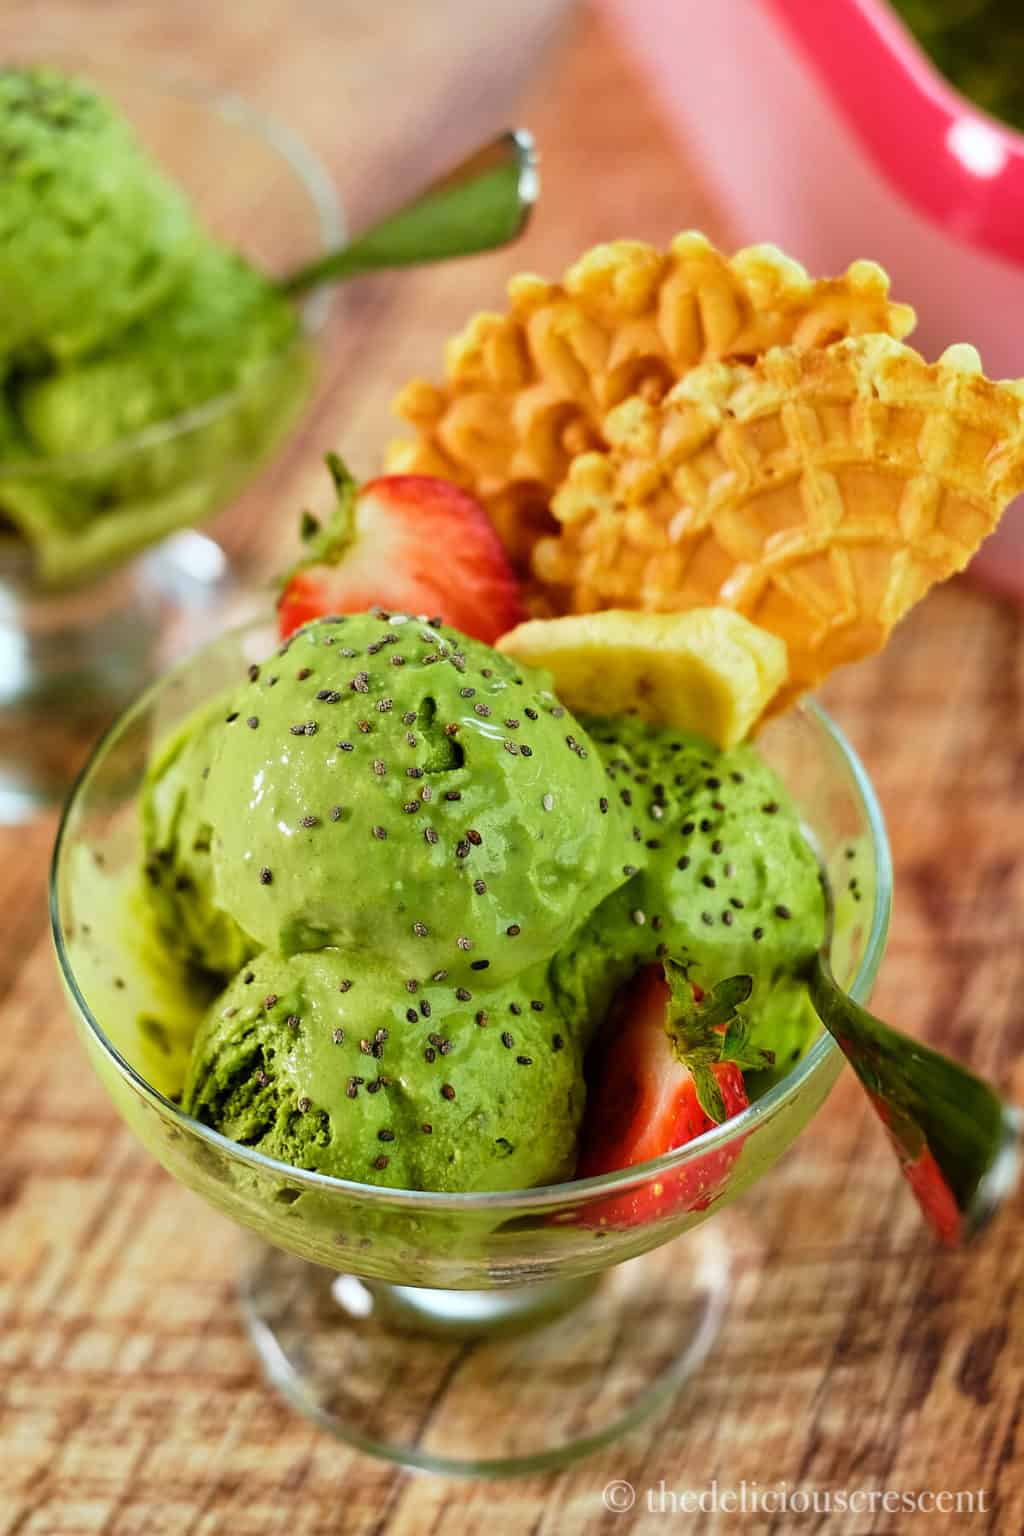 Green Tea Ice Cream With Chia - The Delicious Crescent